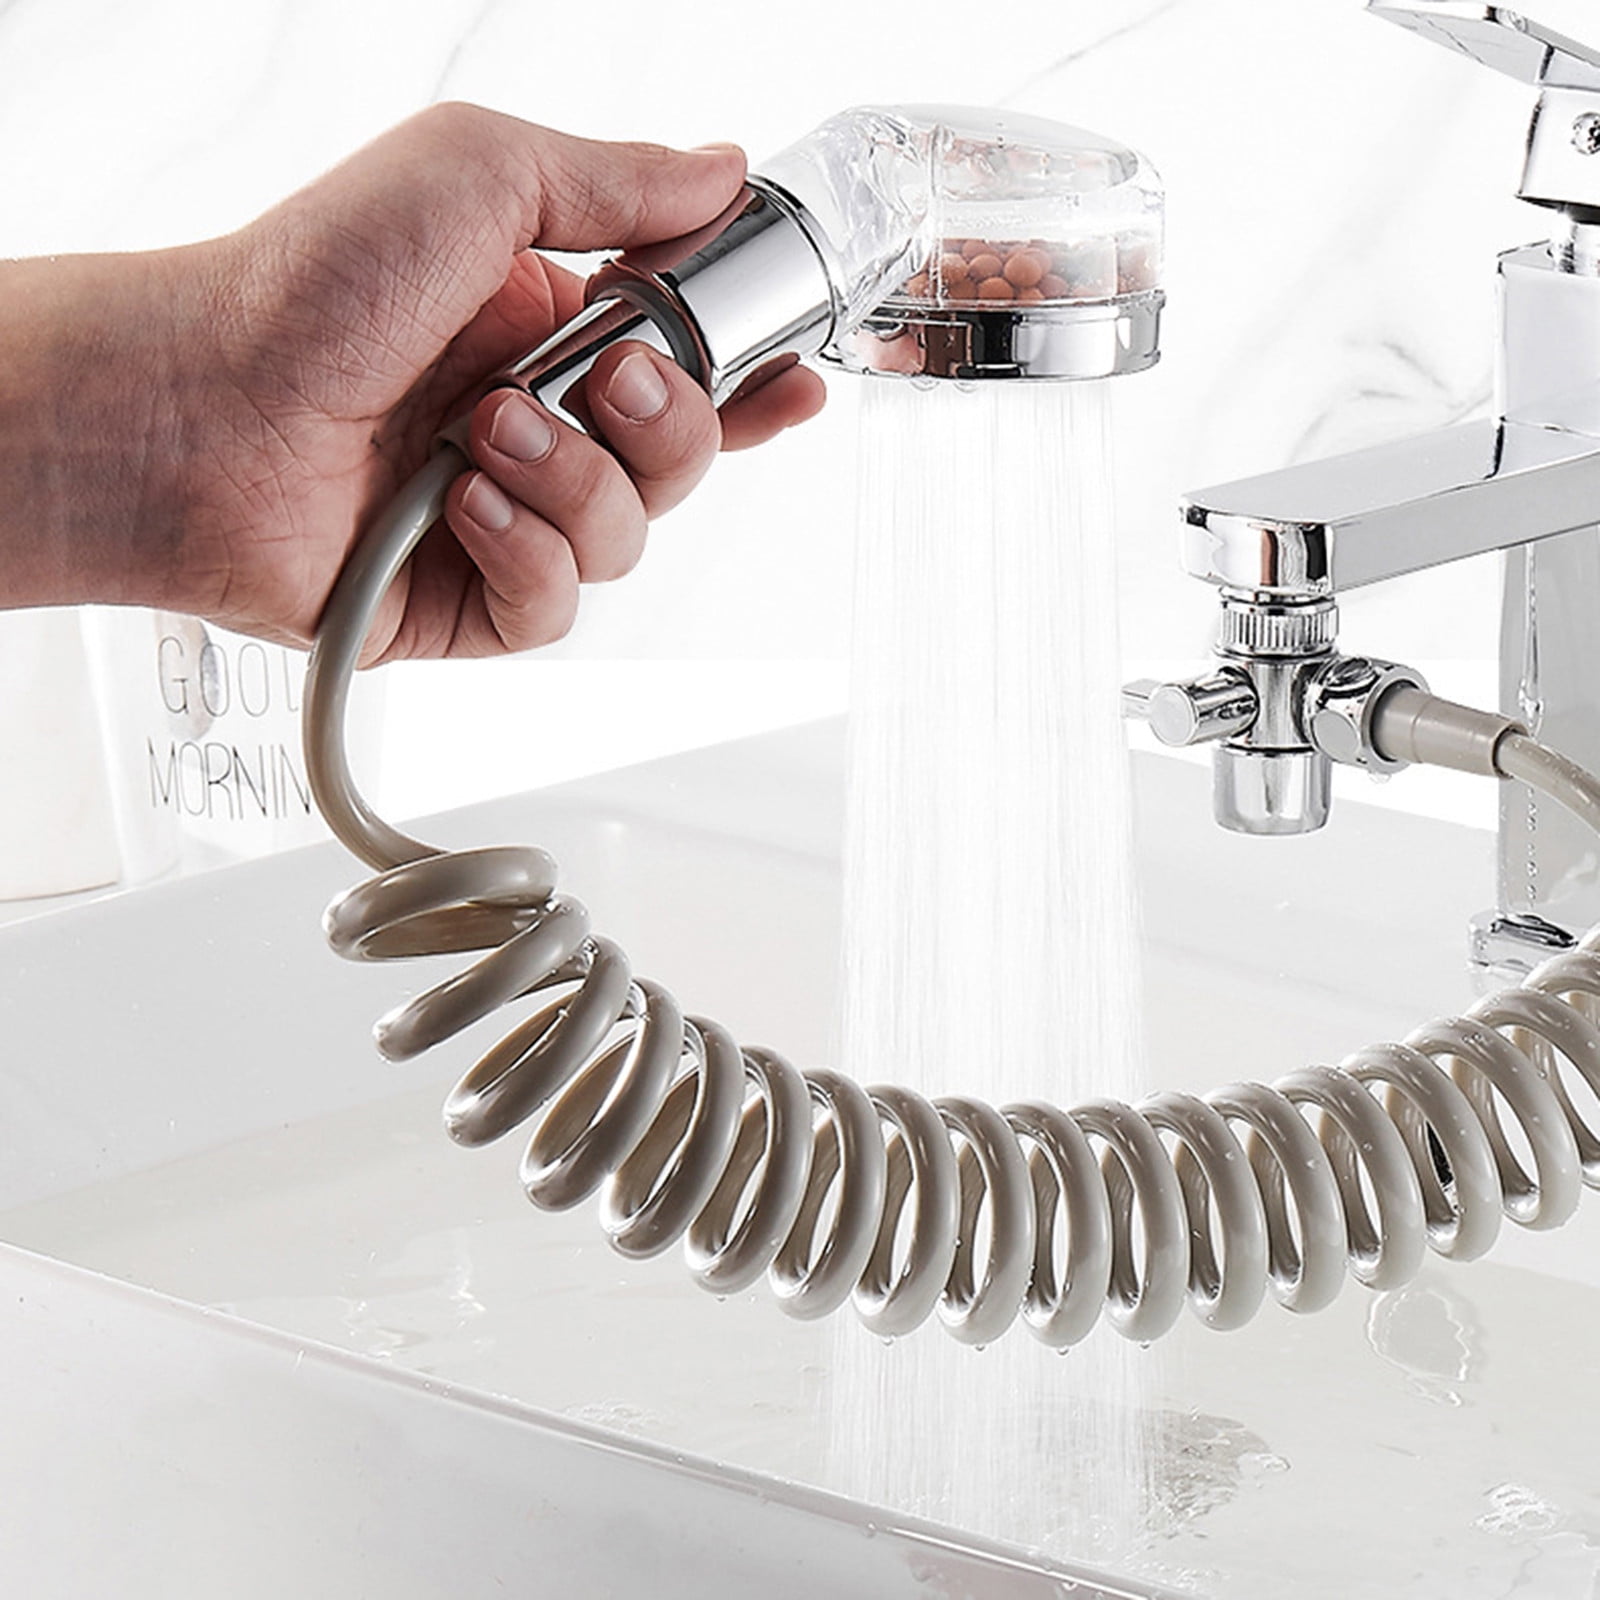 Bathroom Kitchen Hose Basin Shower Hand Held Spray Mixer Spout Faucet Tap Kit US 